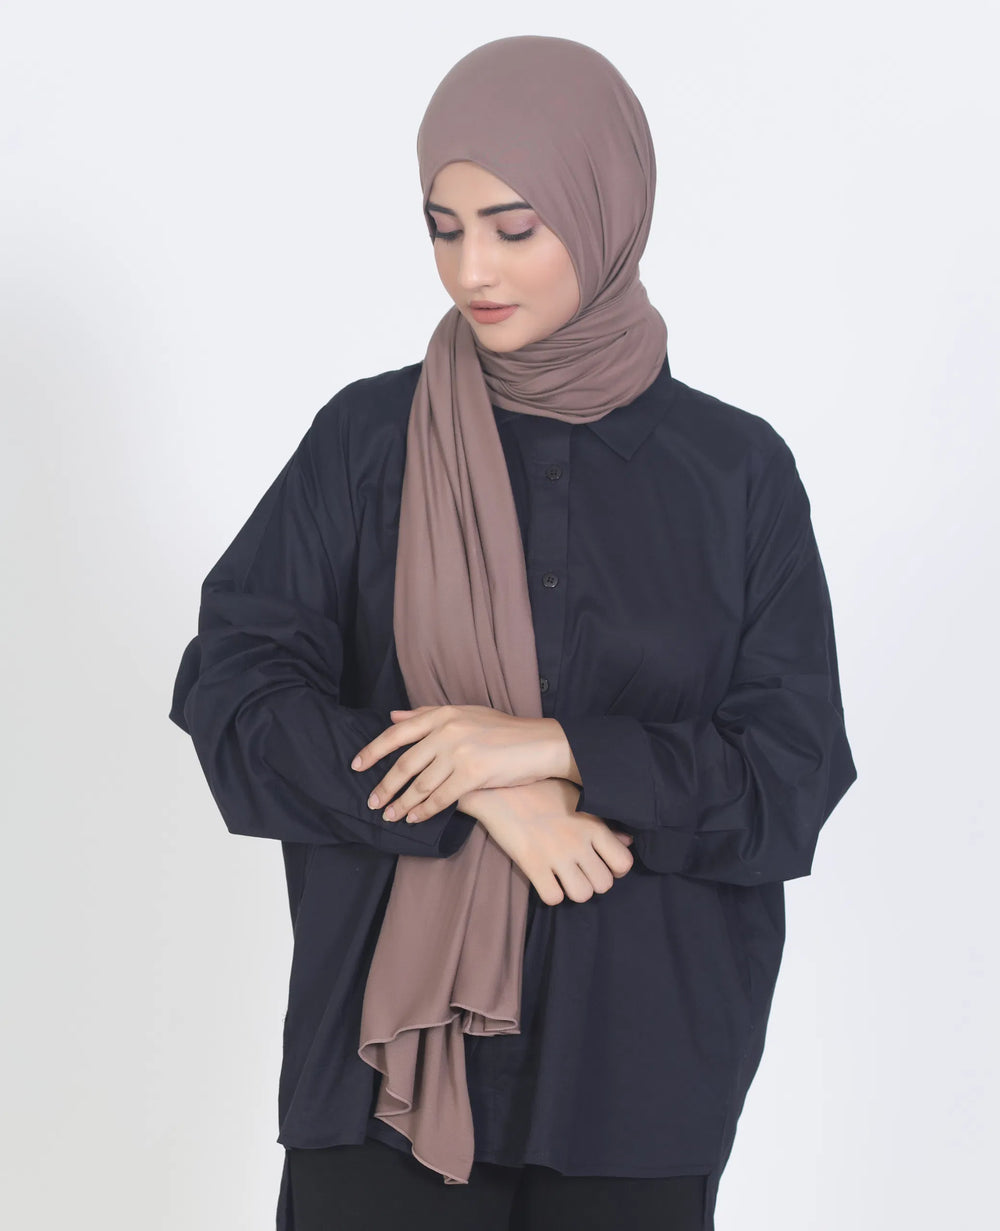 Premium Jersey Hijab- Mocha Brown